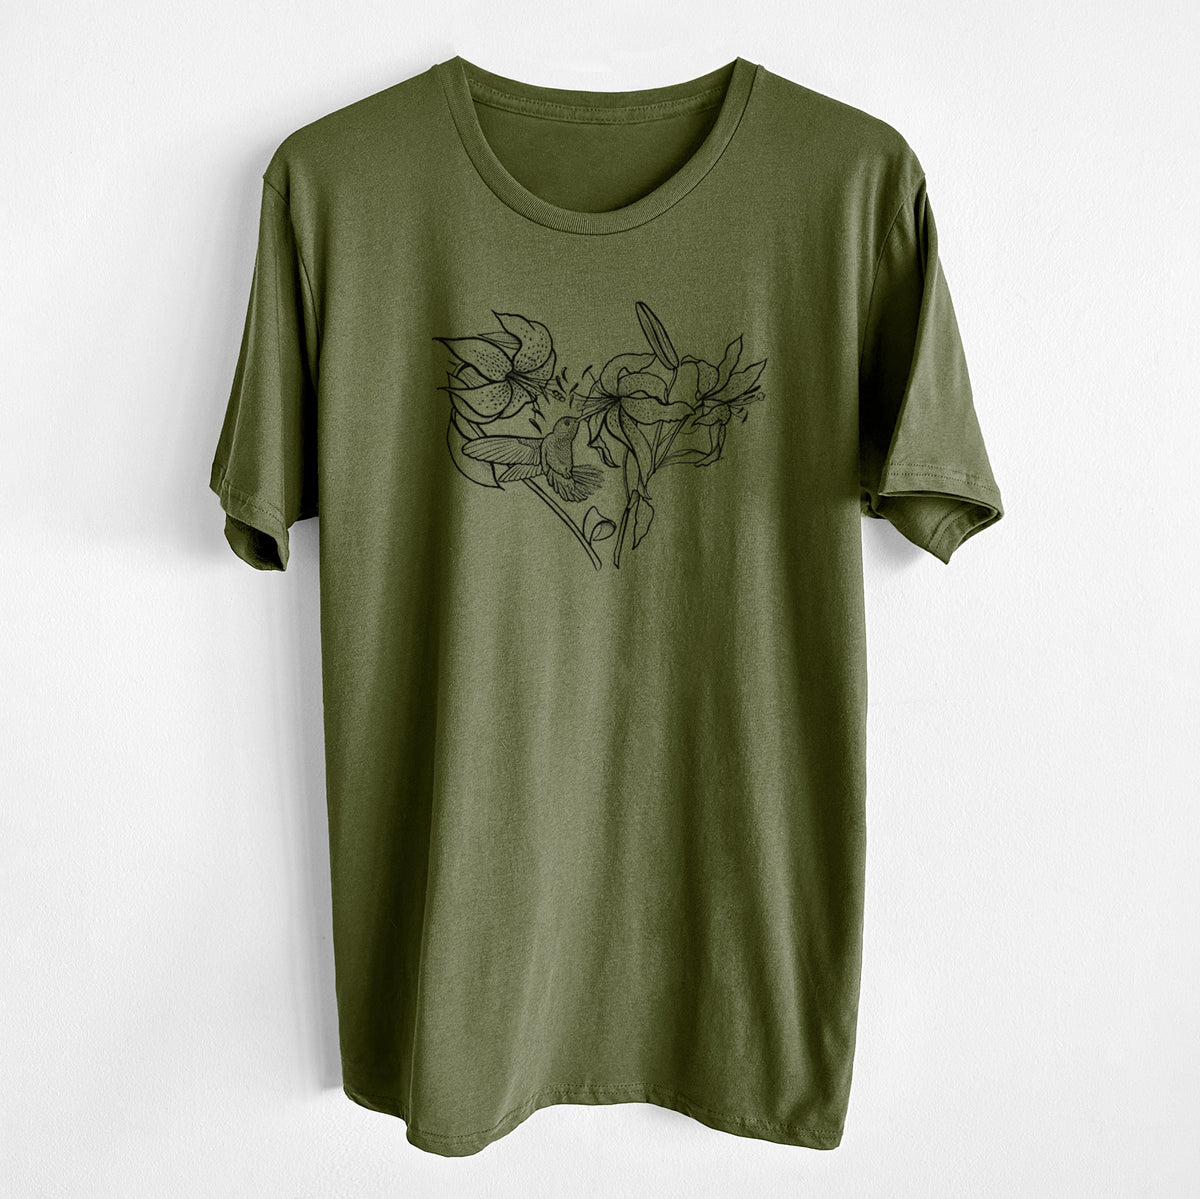 Hummingbird with Lillies Heart - Unisex Crewneck - Made in USA - 100% Organic Cotton